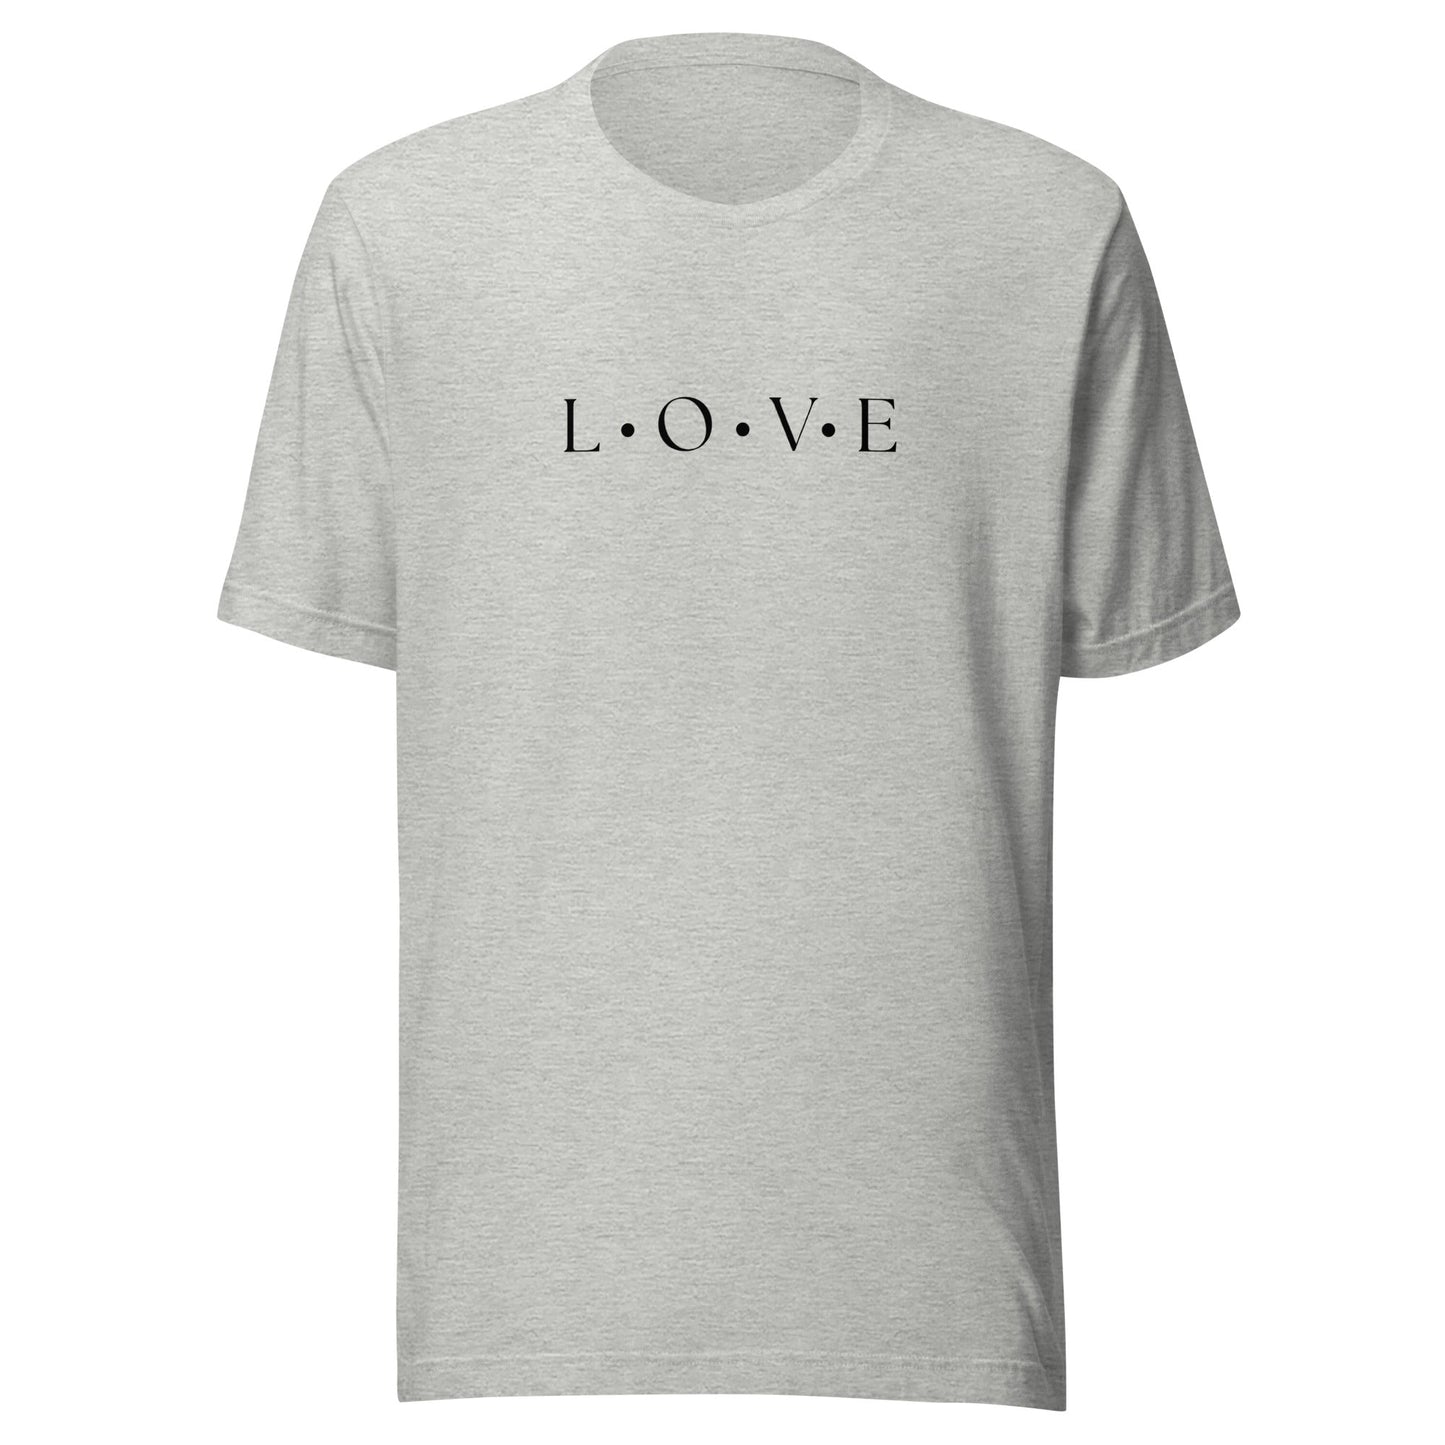 LOVE - Unisex t-shirt - lilaloop - T-shirt